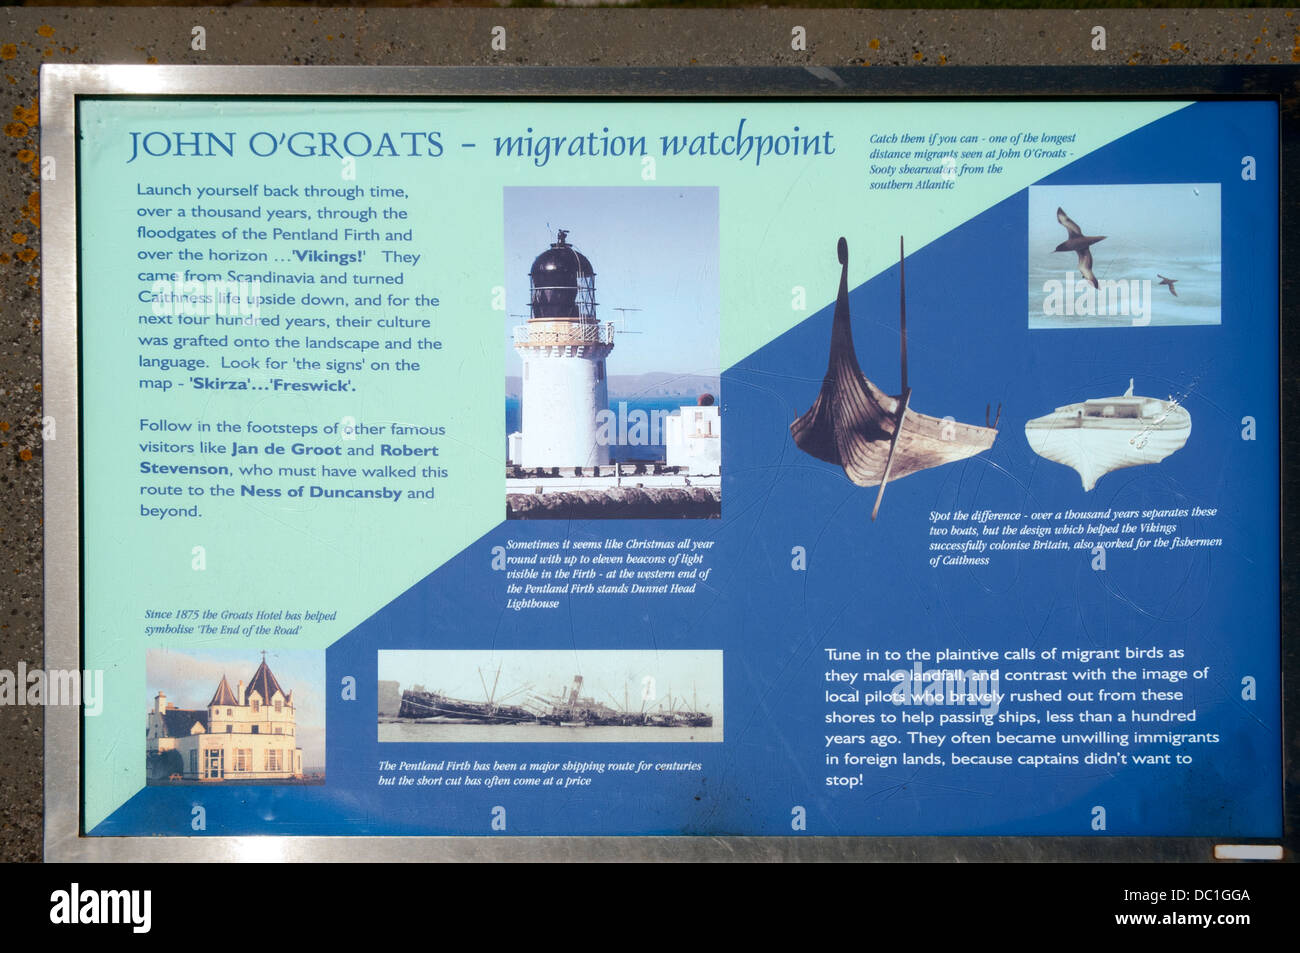 Touristischen Hinweisschild (interpretativen Board) auf dem Küstenpfad bei John O' Groats, Caithness, Schottland, UK Stockfoto